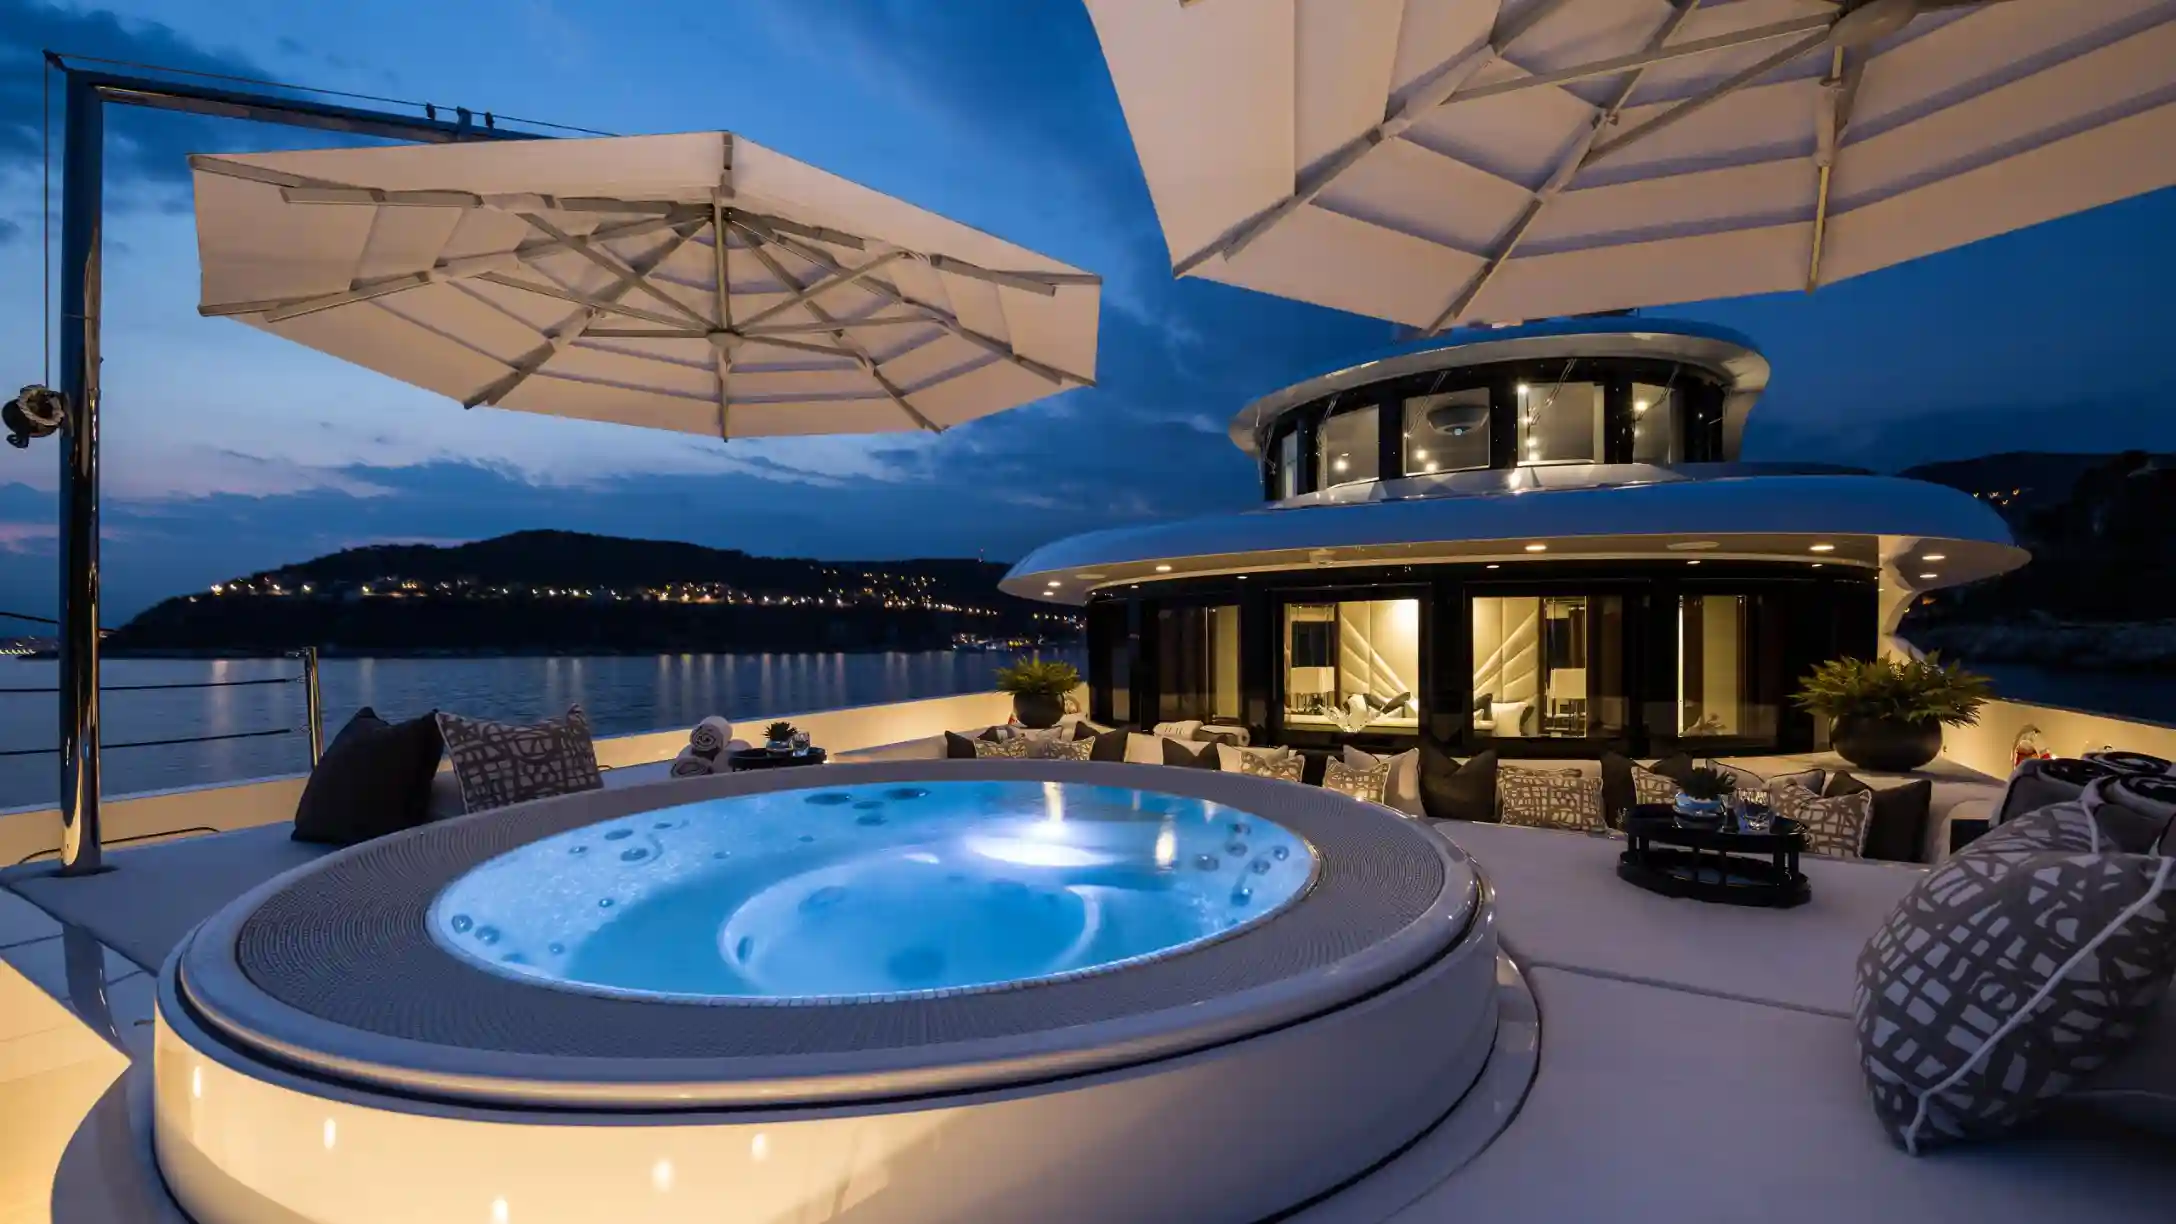 SOUNDWAVE Luxury Charter Yacht by Benetti16